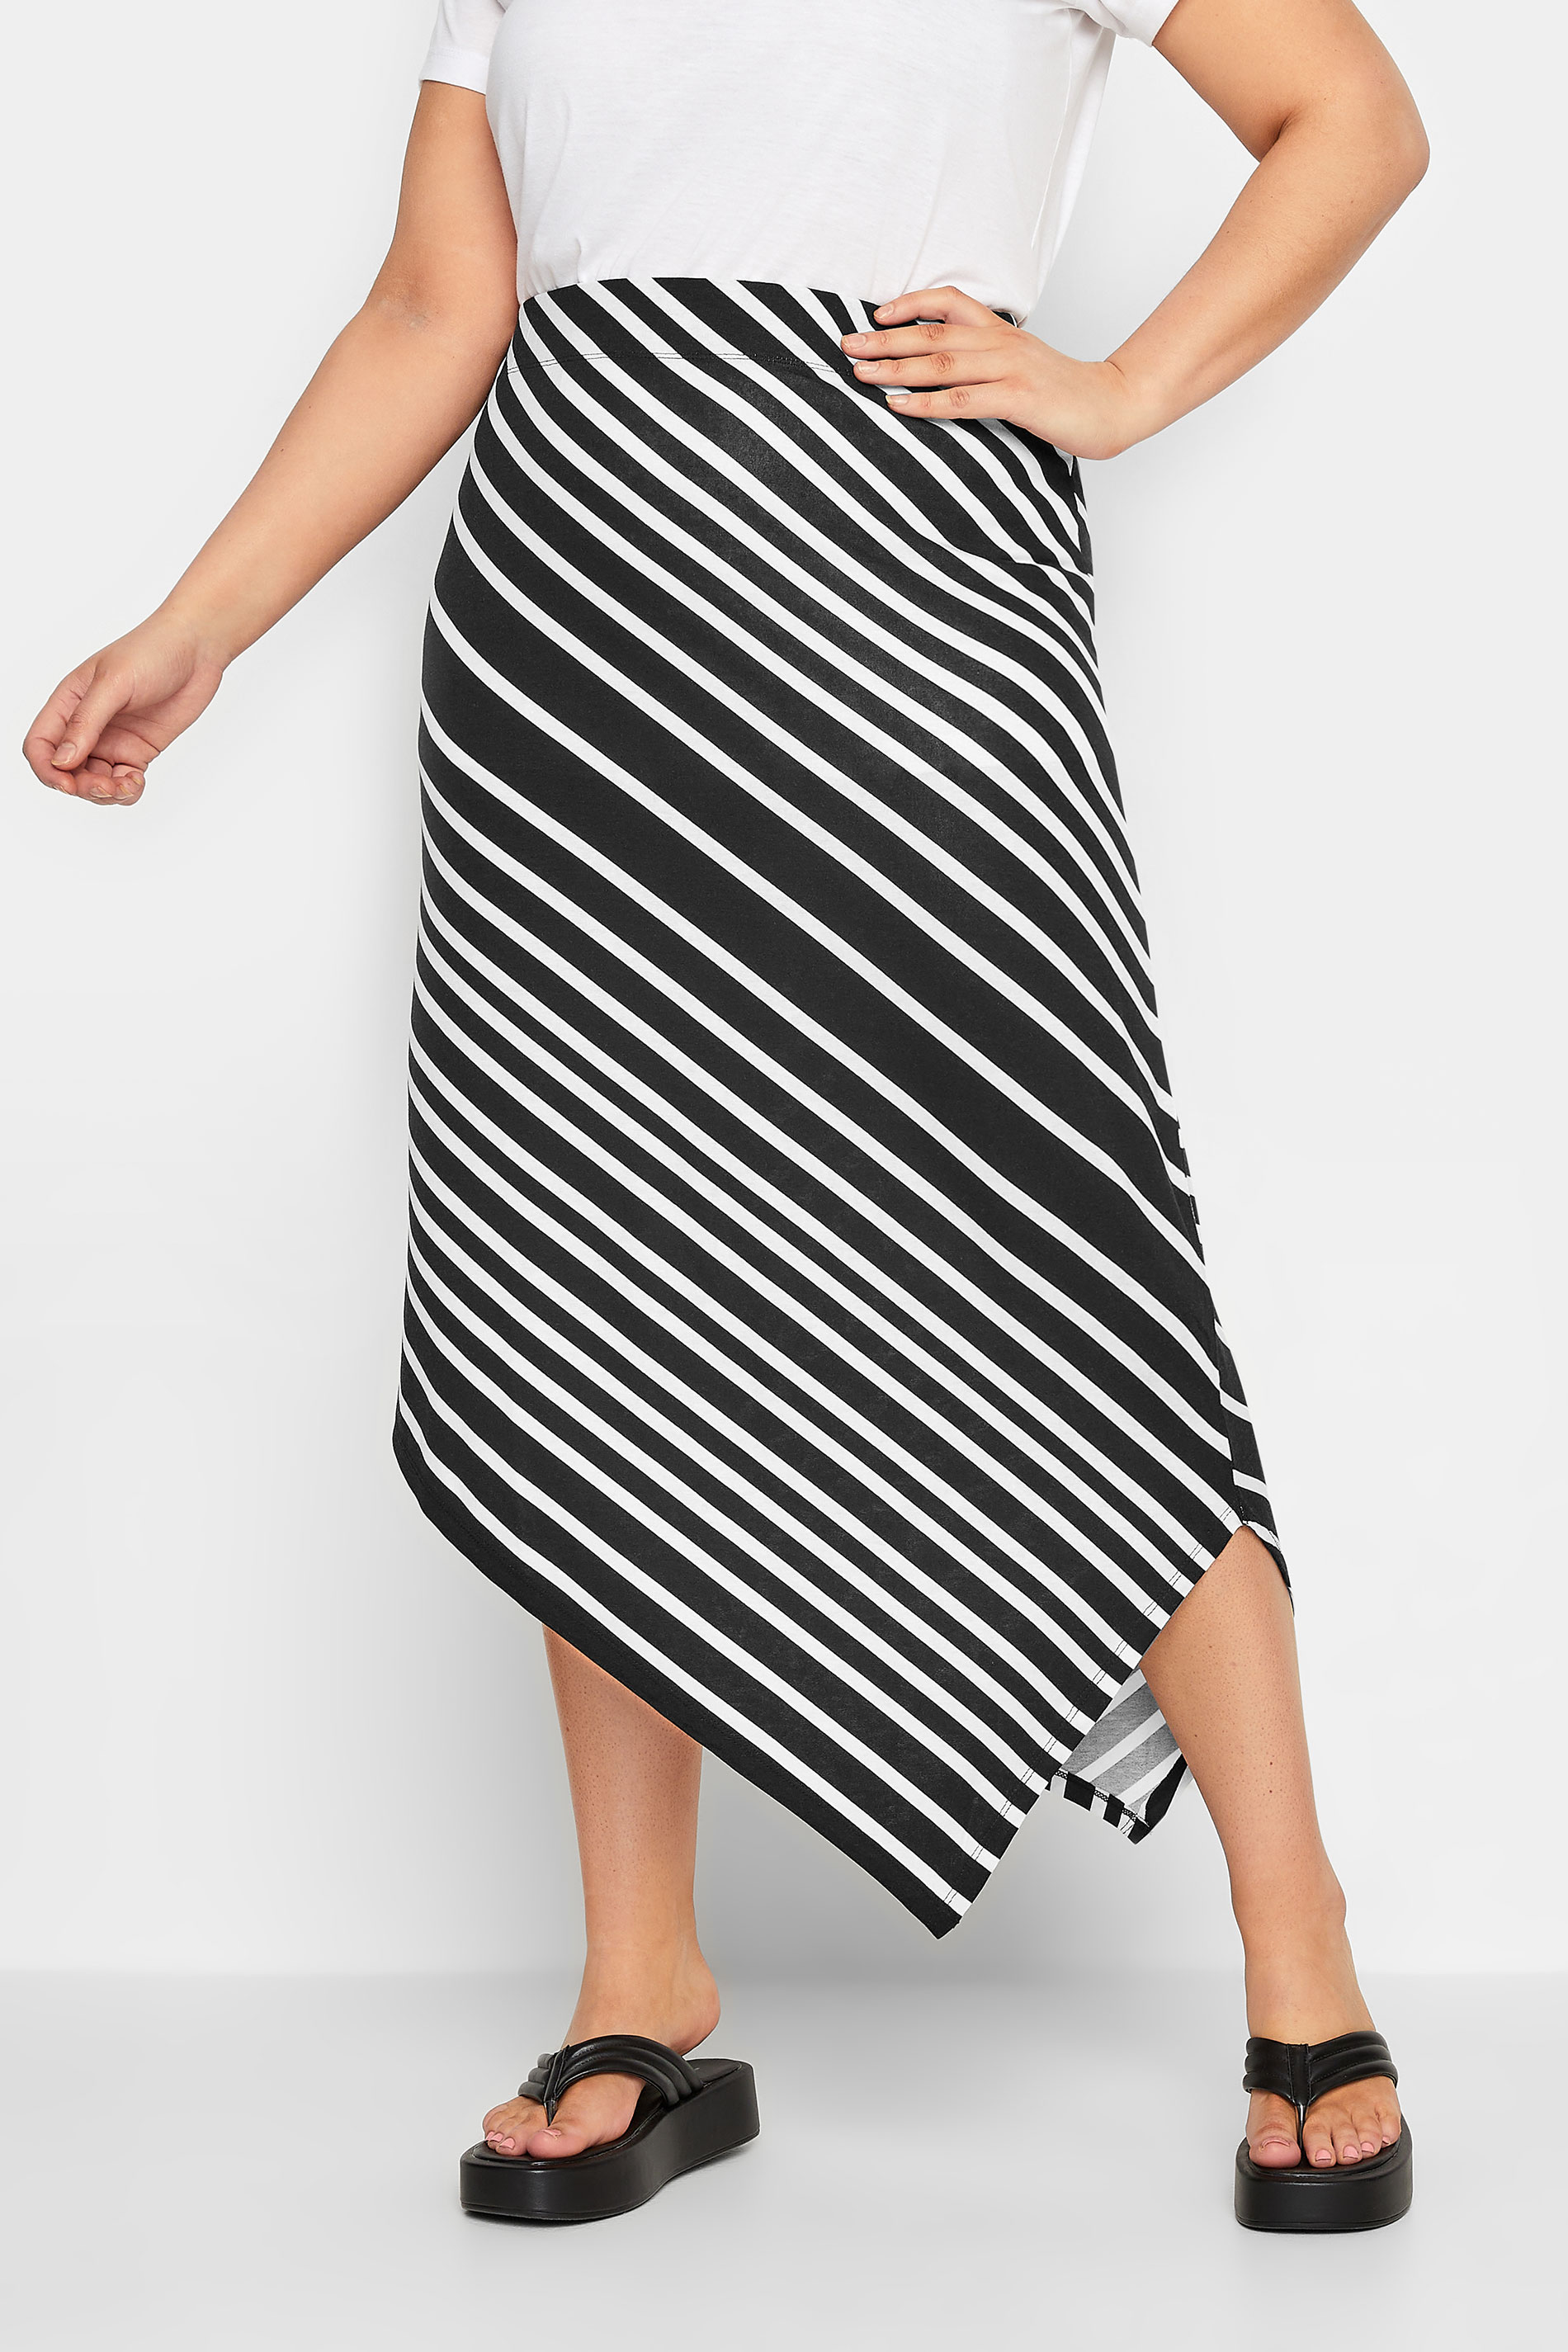 YOURS Curve Plus Size Black Stripe Asymmetric Skirt | Yours Clothing 1